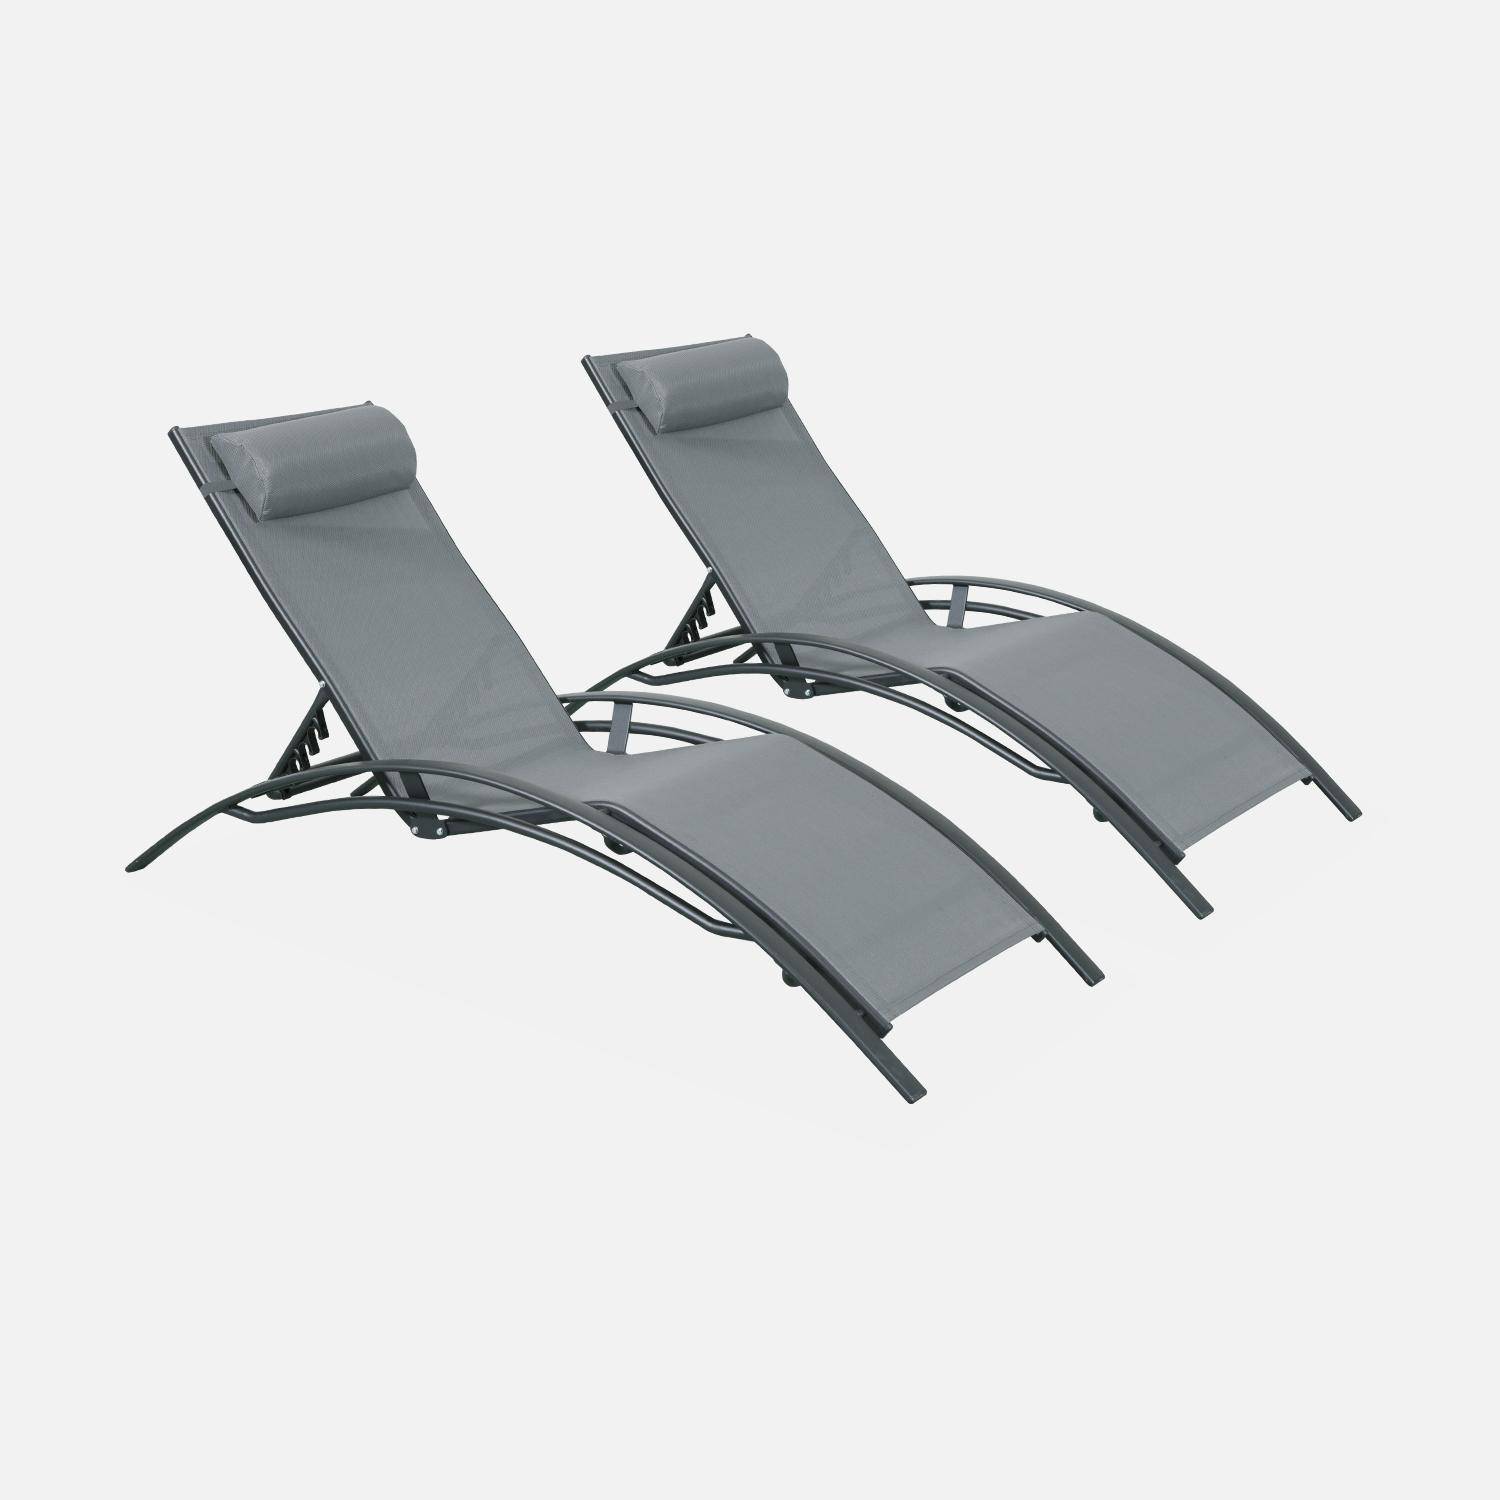 Duo aus Sonnenliegen aus Aluminium - Louisa Anthrazit - Liegestühle aus Aluminium und Textilene Photo3